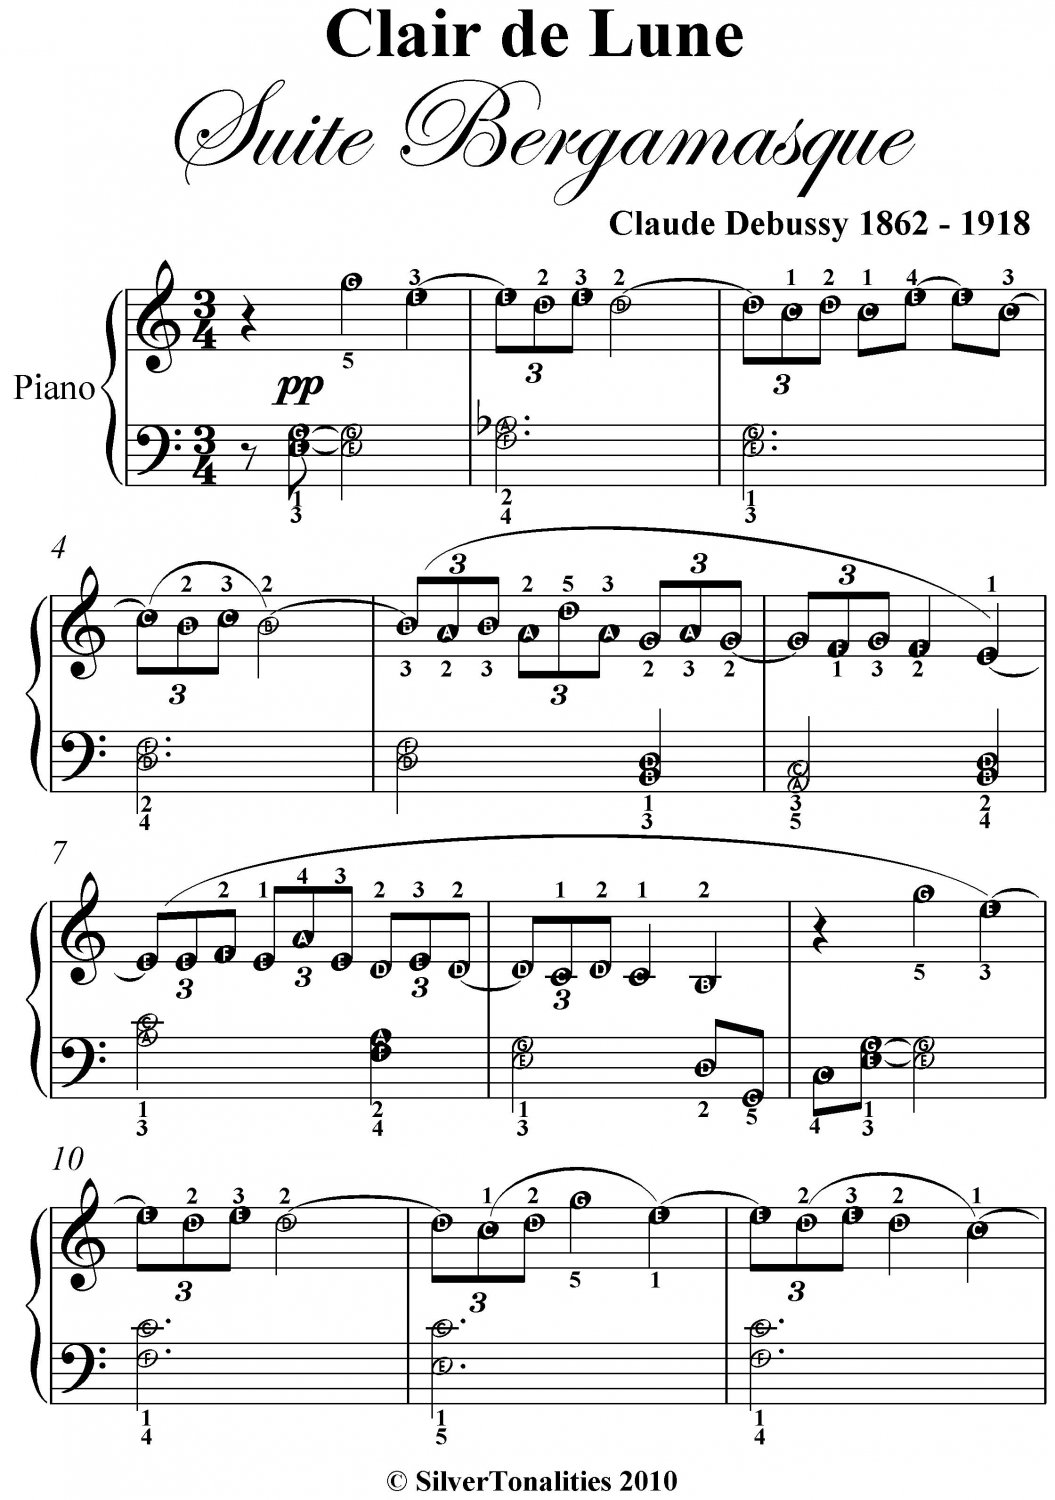 Clair de Lune Suite Bergamasque Easy Elementary Piano Sheet Music PDF